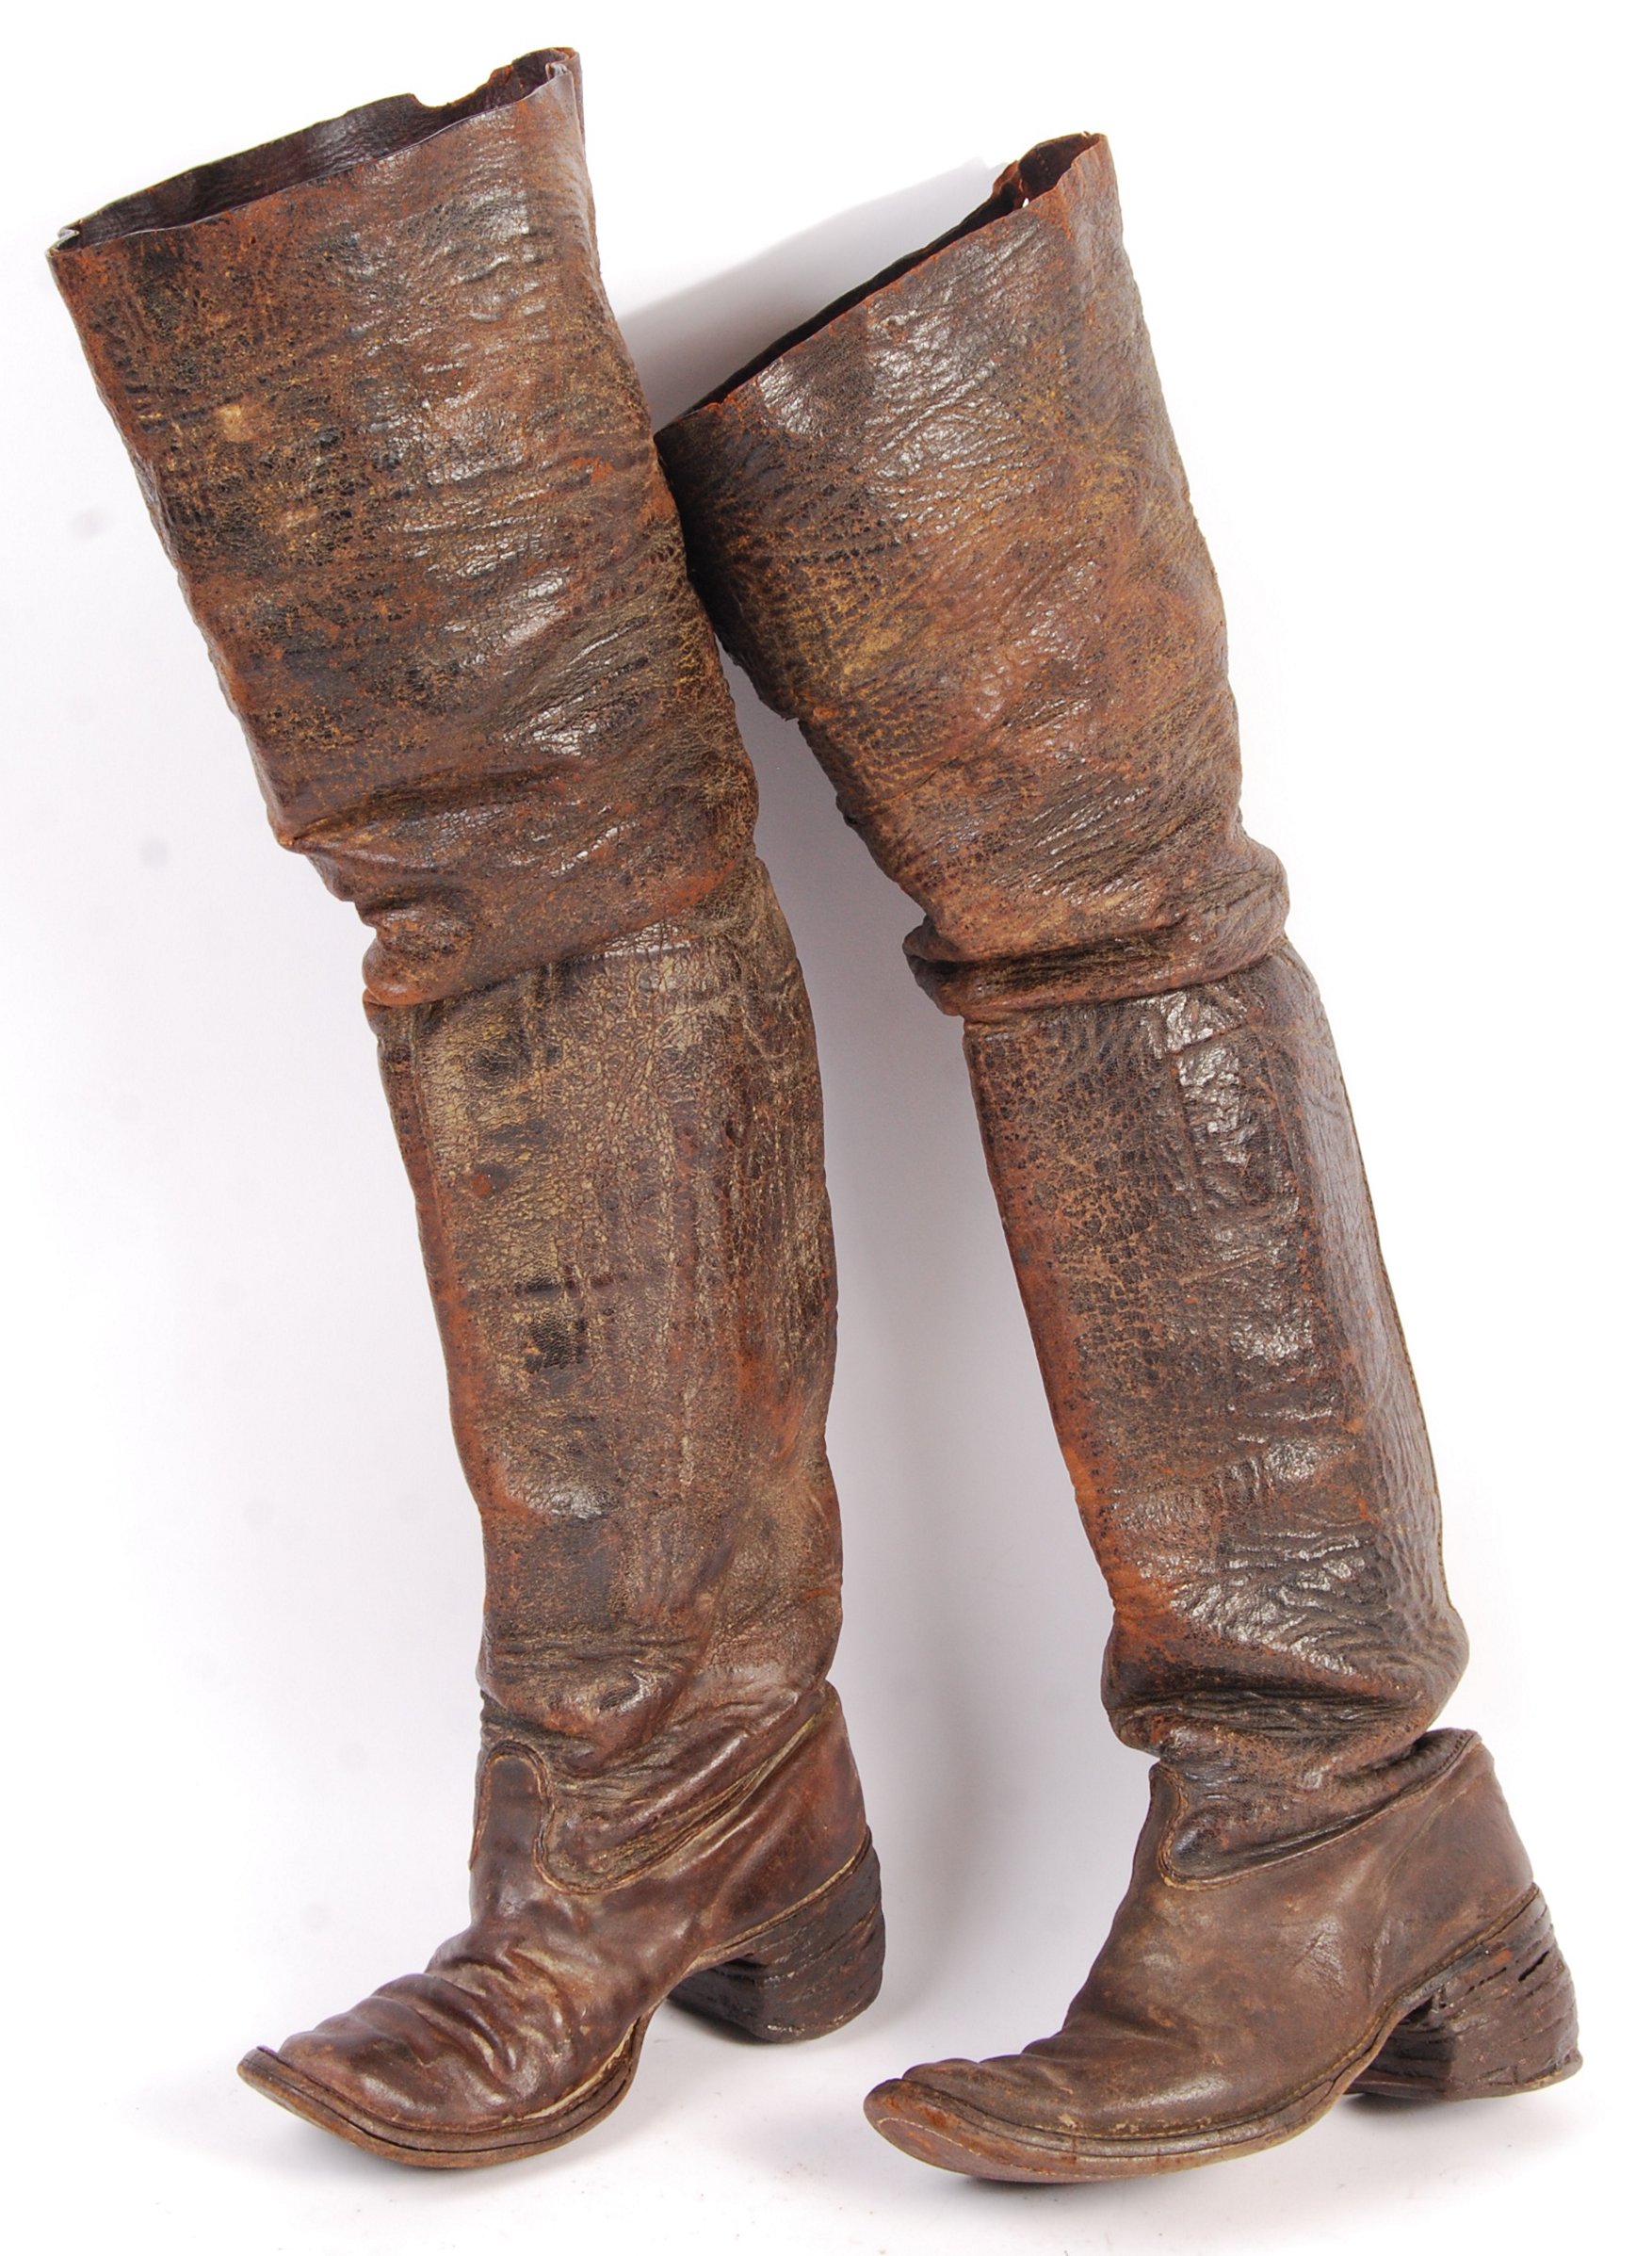 An incredible rare pair of 17th / 18th century Civil War cavalry boots ...